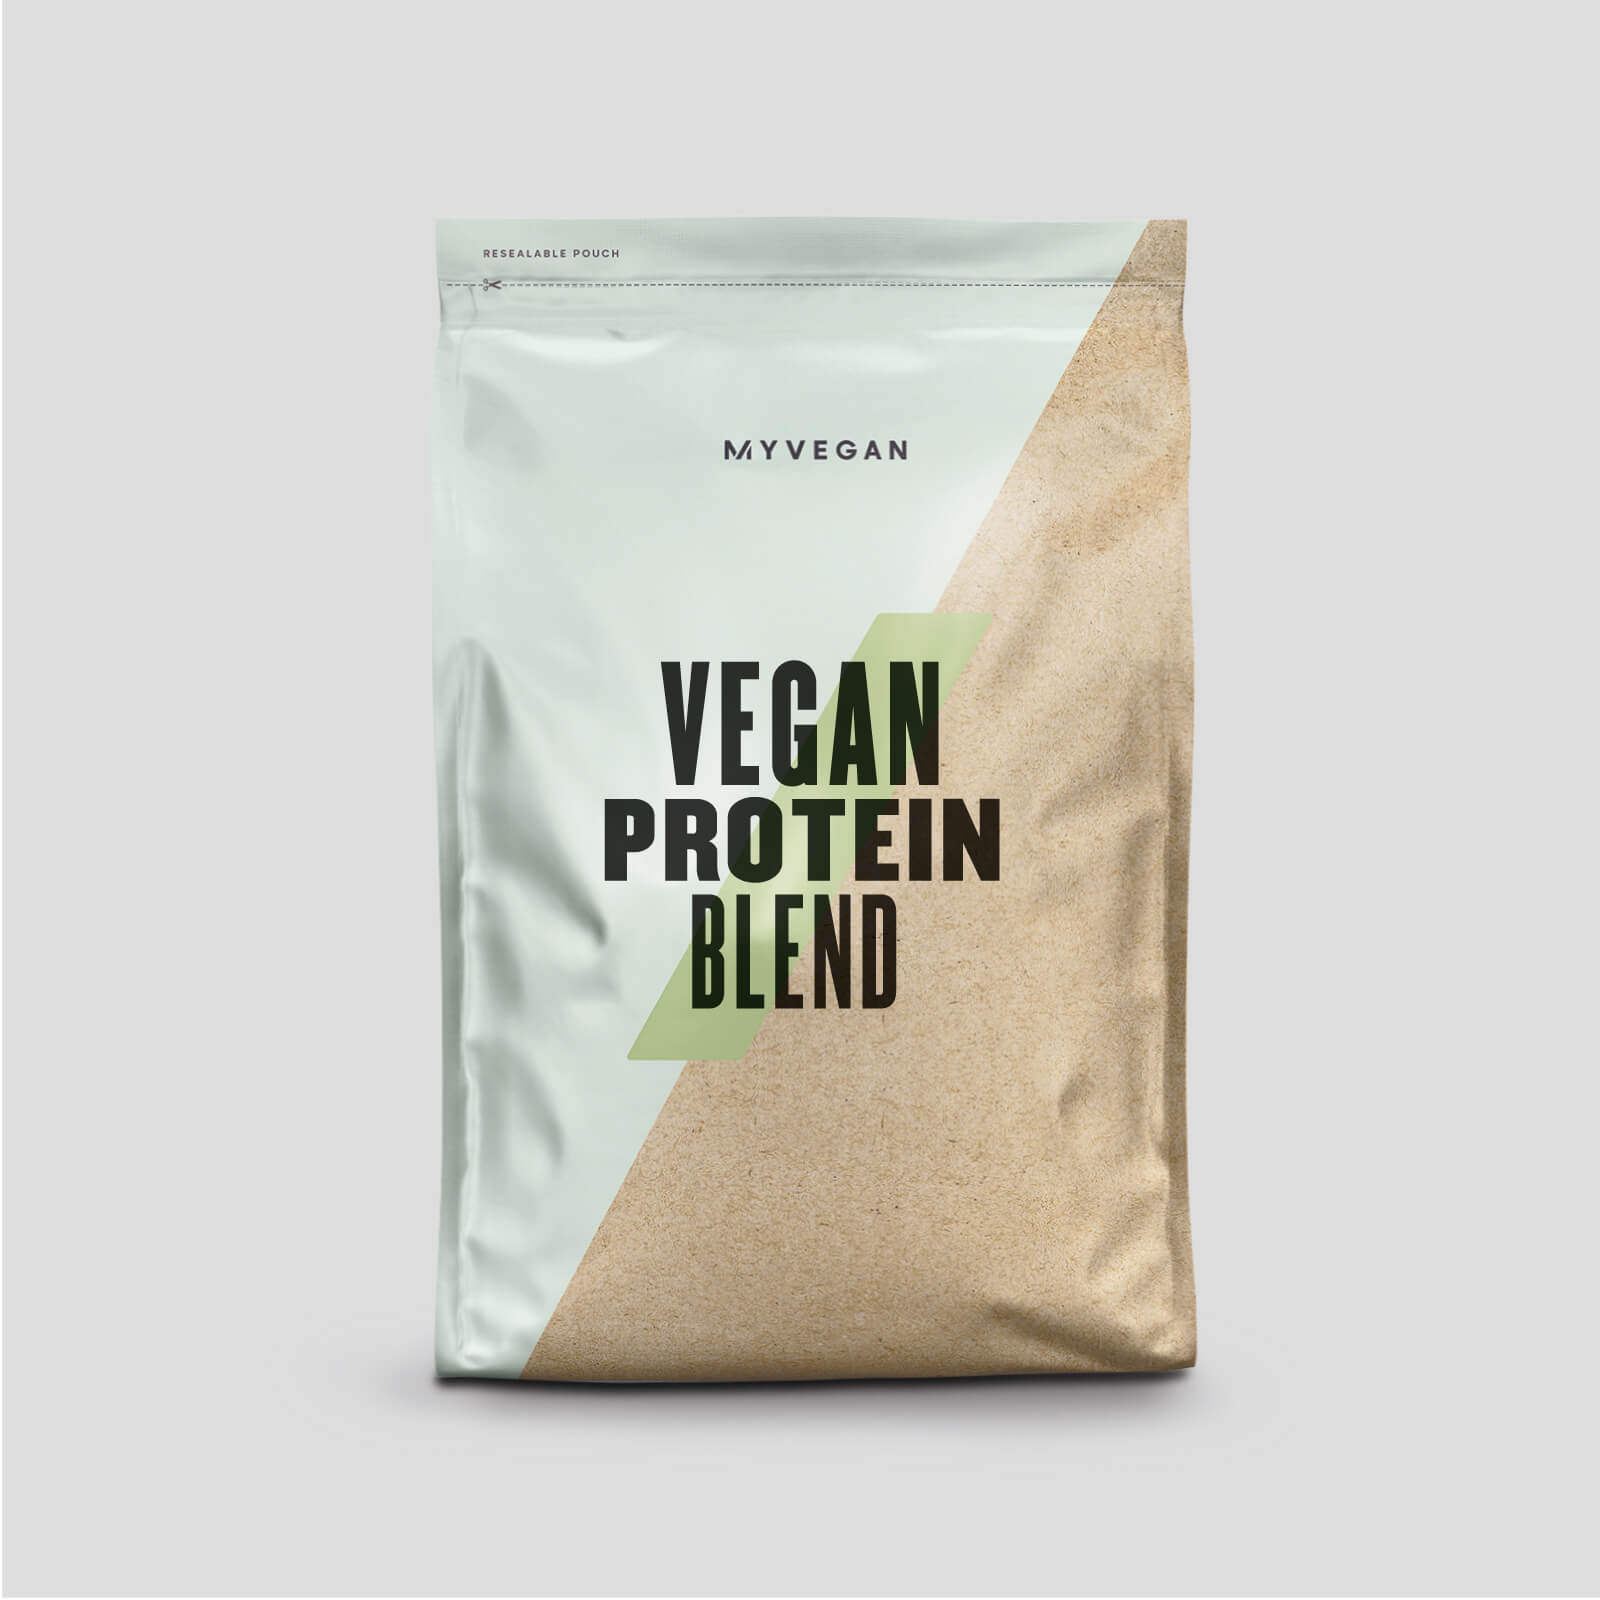 Myvegan Vegan Protein Blend - 500g - Turmeric Latte